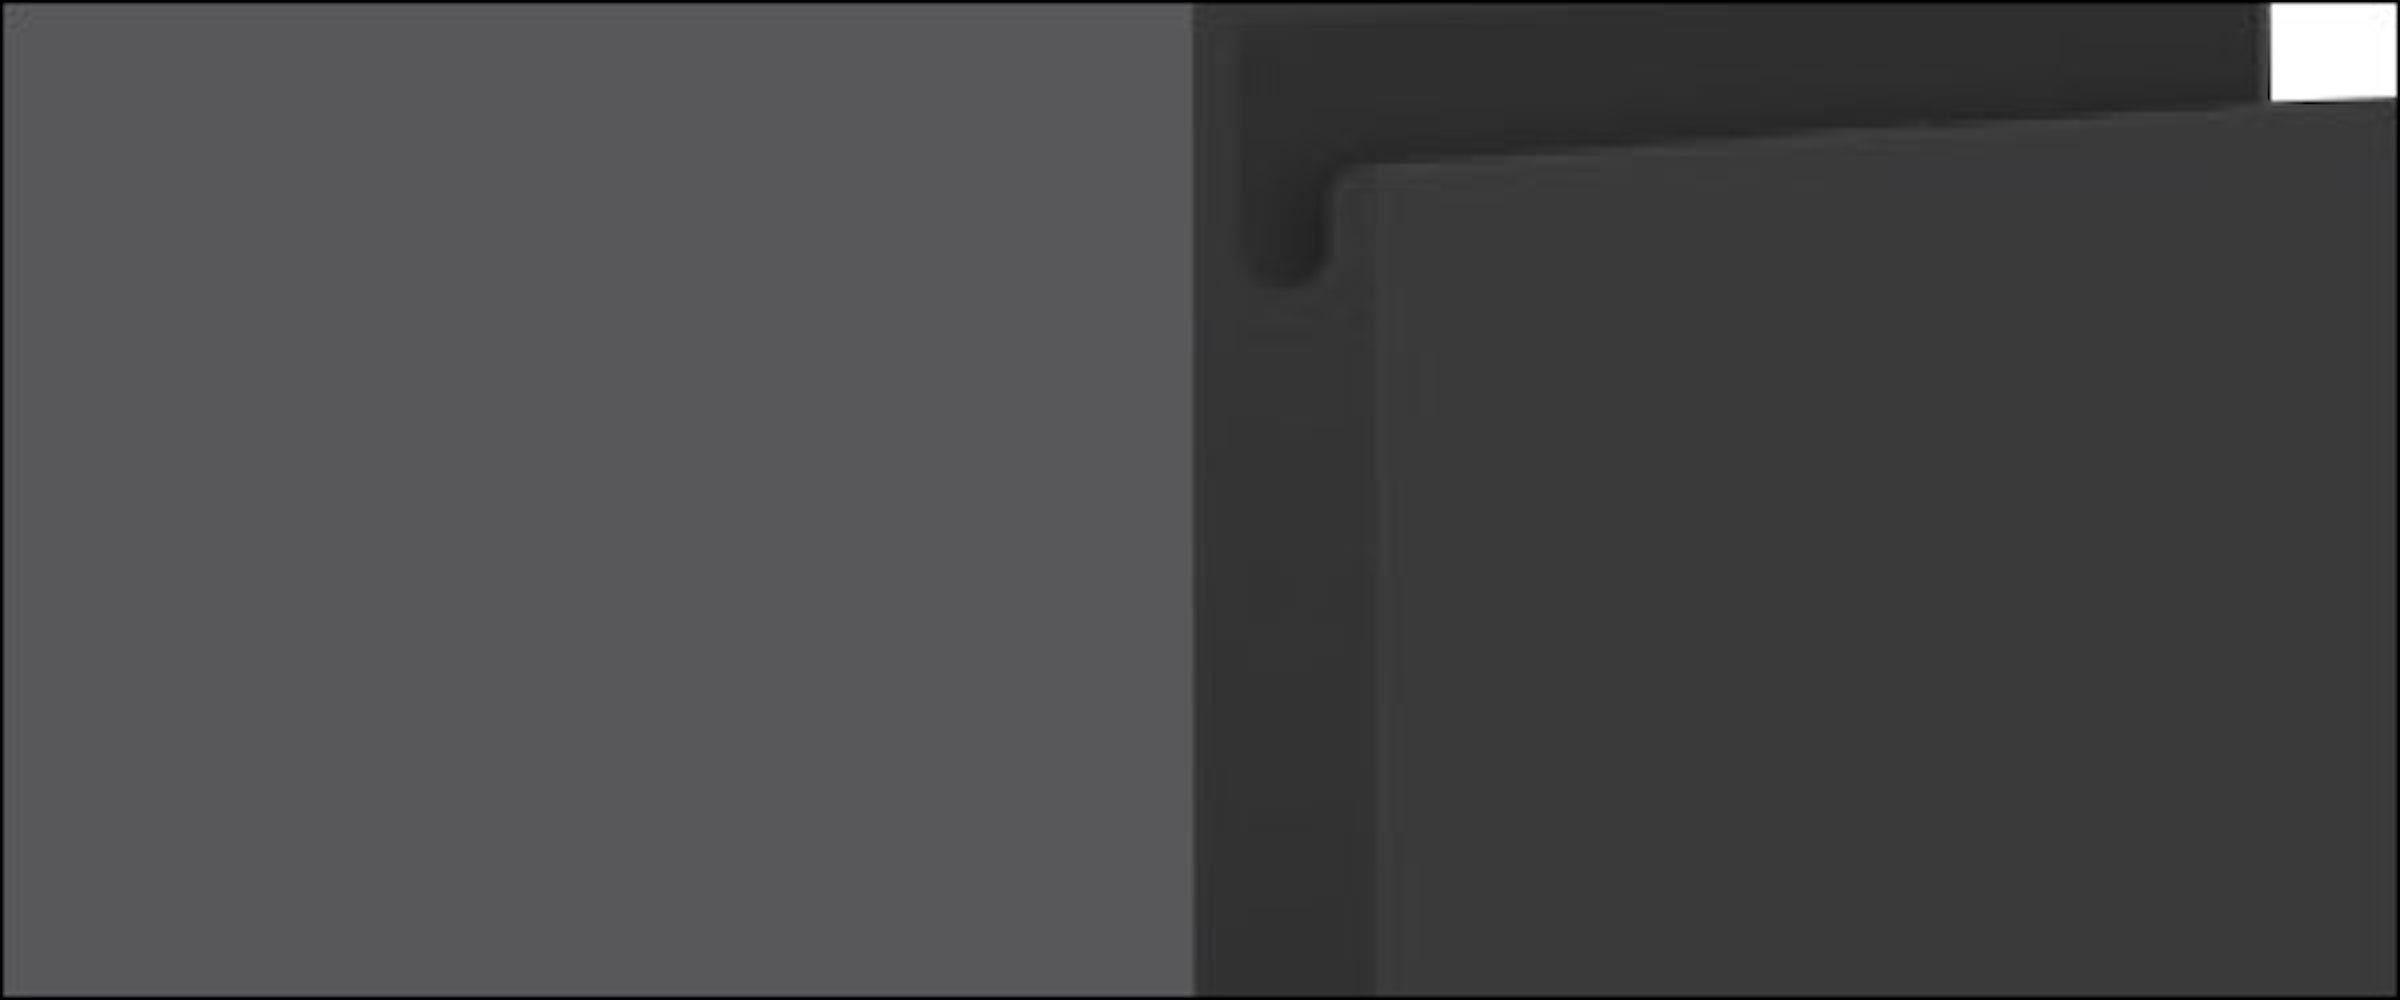 Spülenunterschrank Schublade 60cm wählbar 1 Avellino graphit matt Acryl (Teilauszug) Feldmann-Wohnen & Korpusfarbe grifflos Front-